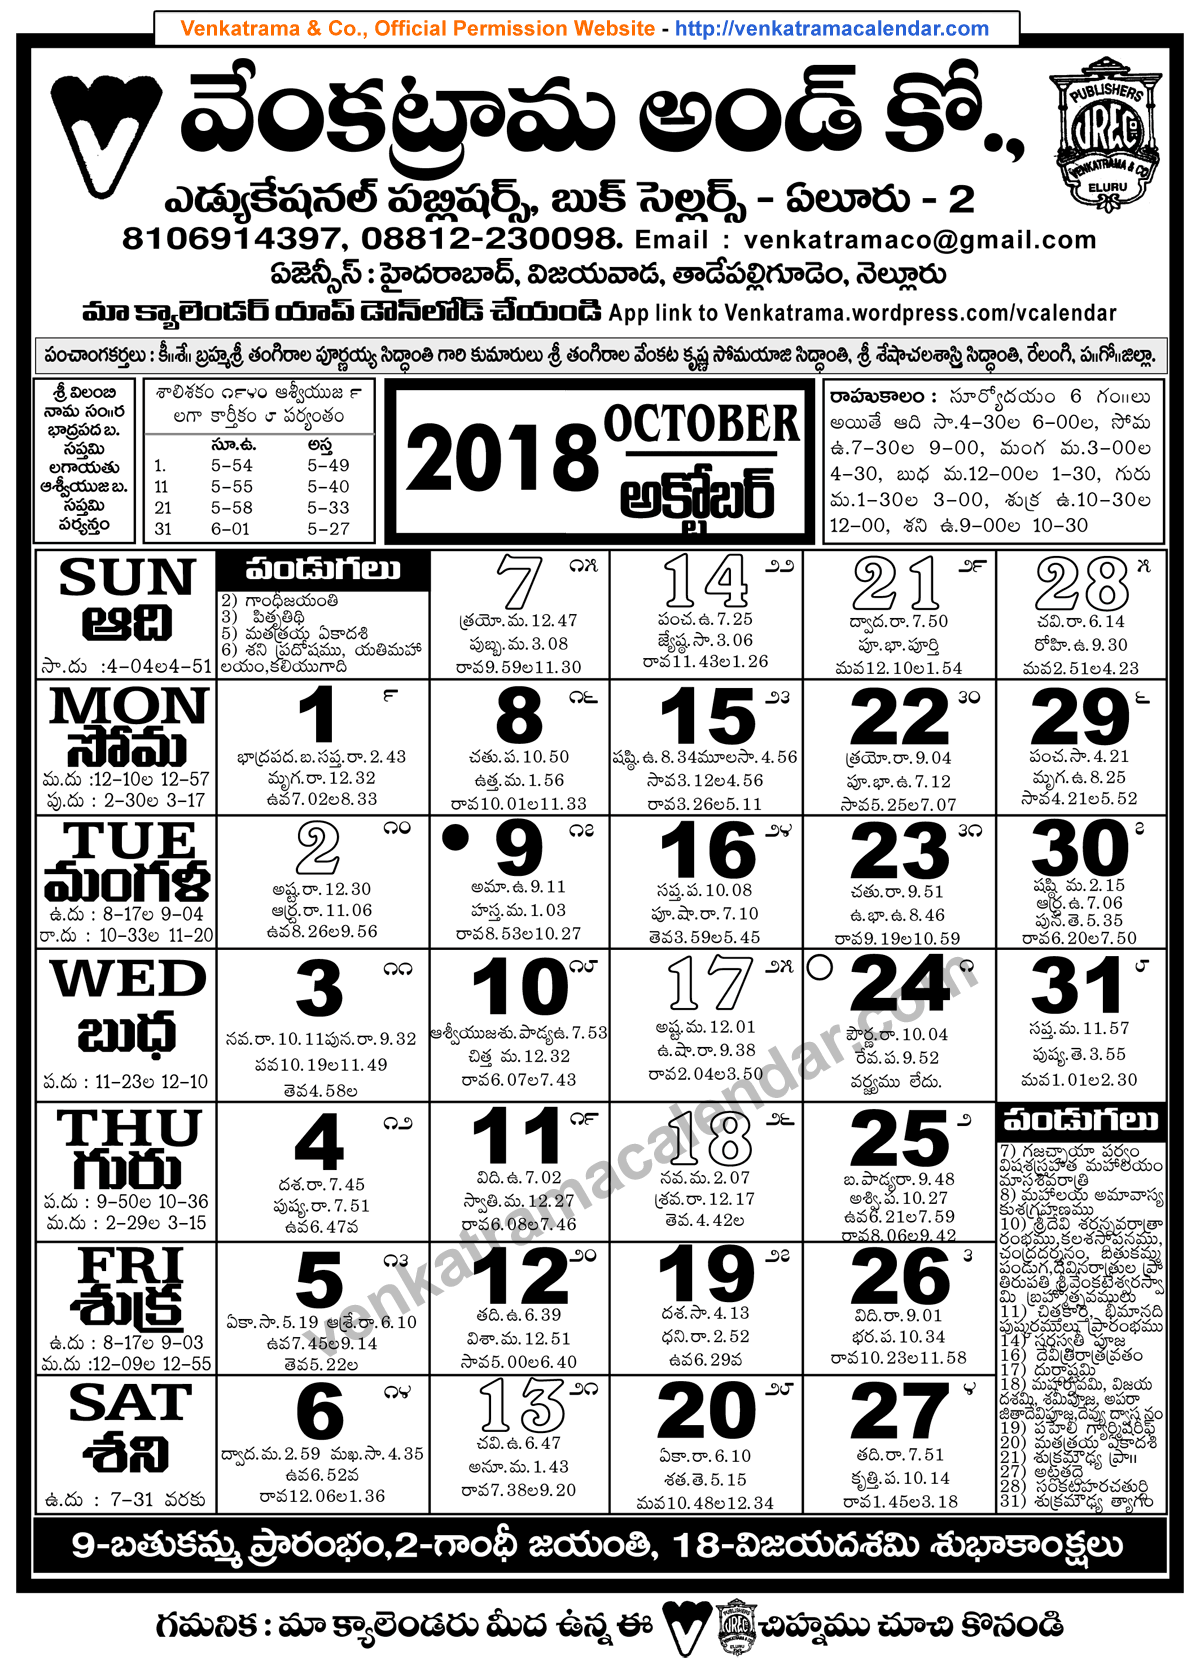 Venkatrama Co 2018 October Telugu Calendar Venkatrama Telugu Calendar